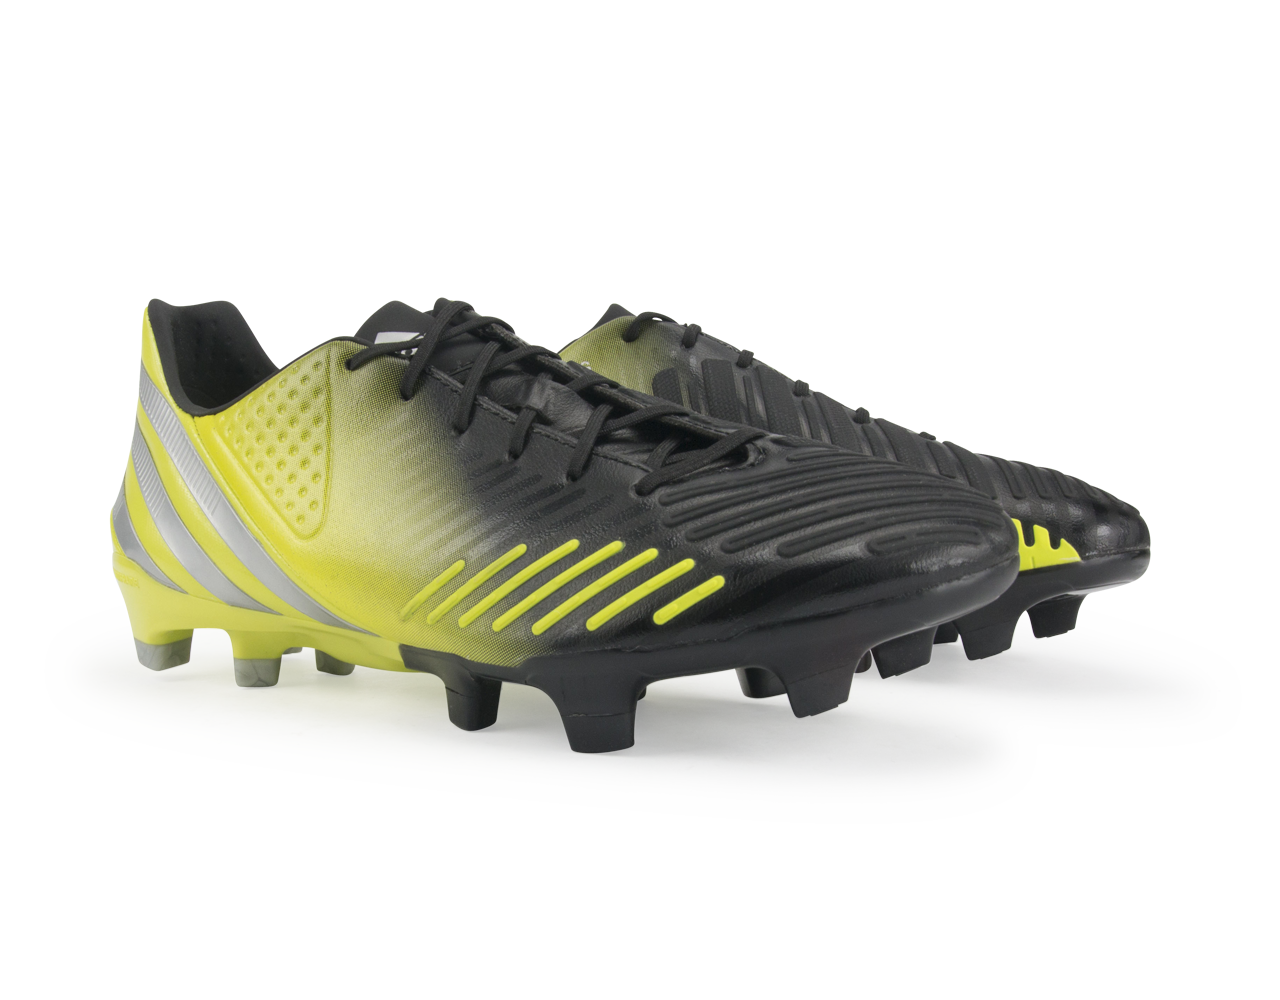 Adidas Predator LZ TRX FG Football Boots Black Yellow Cleats